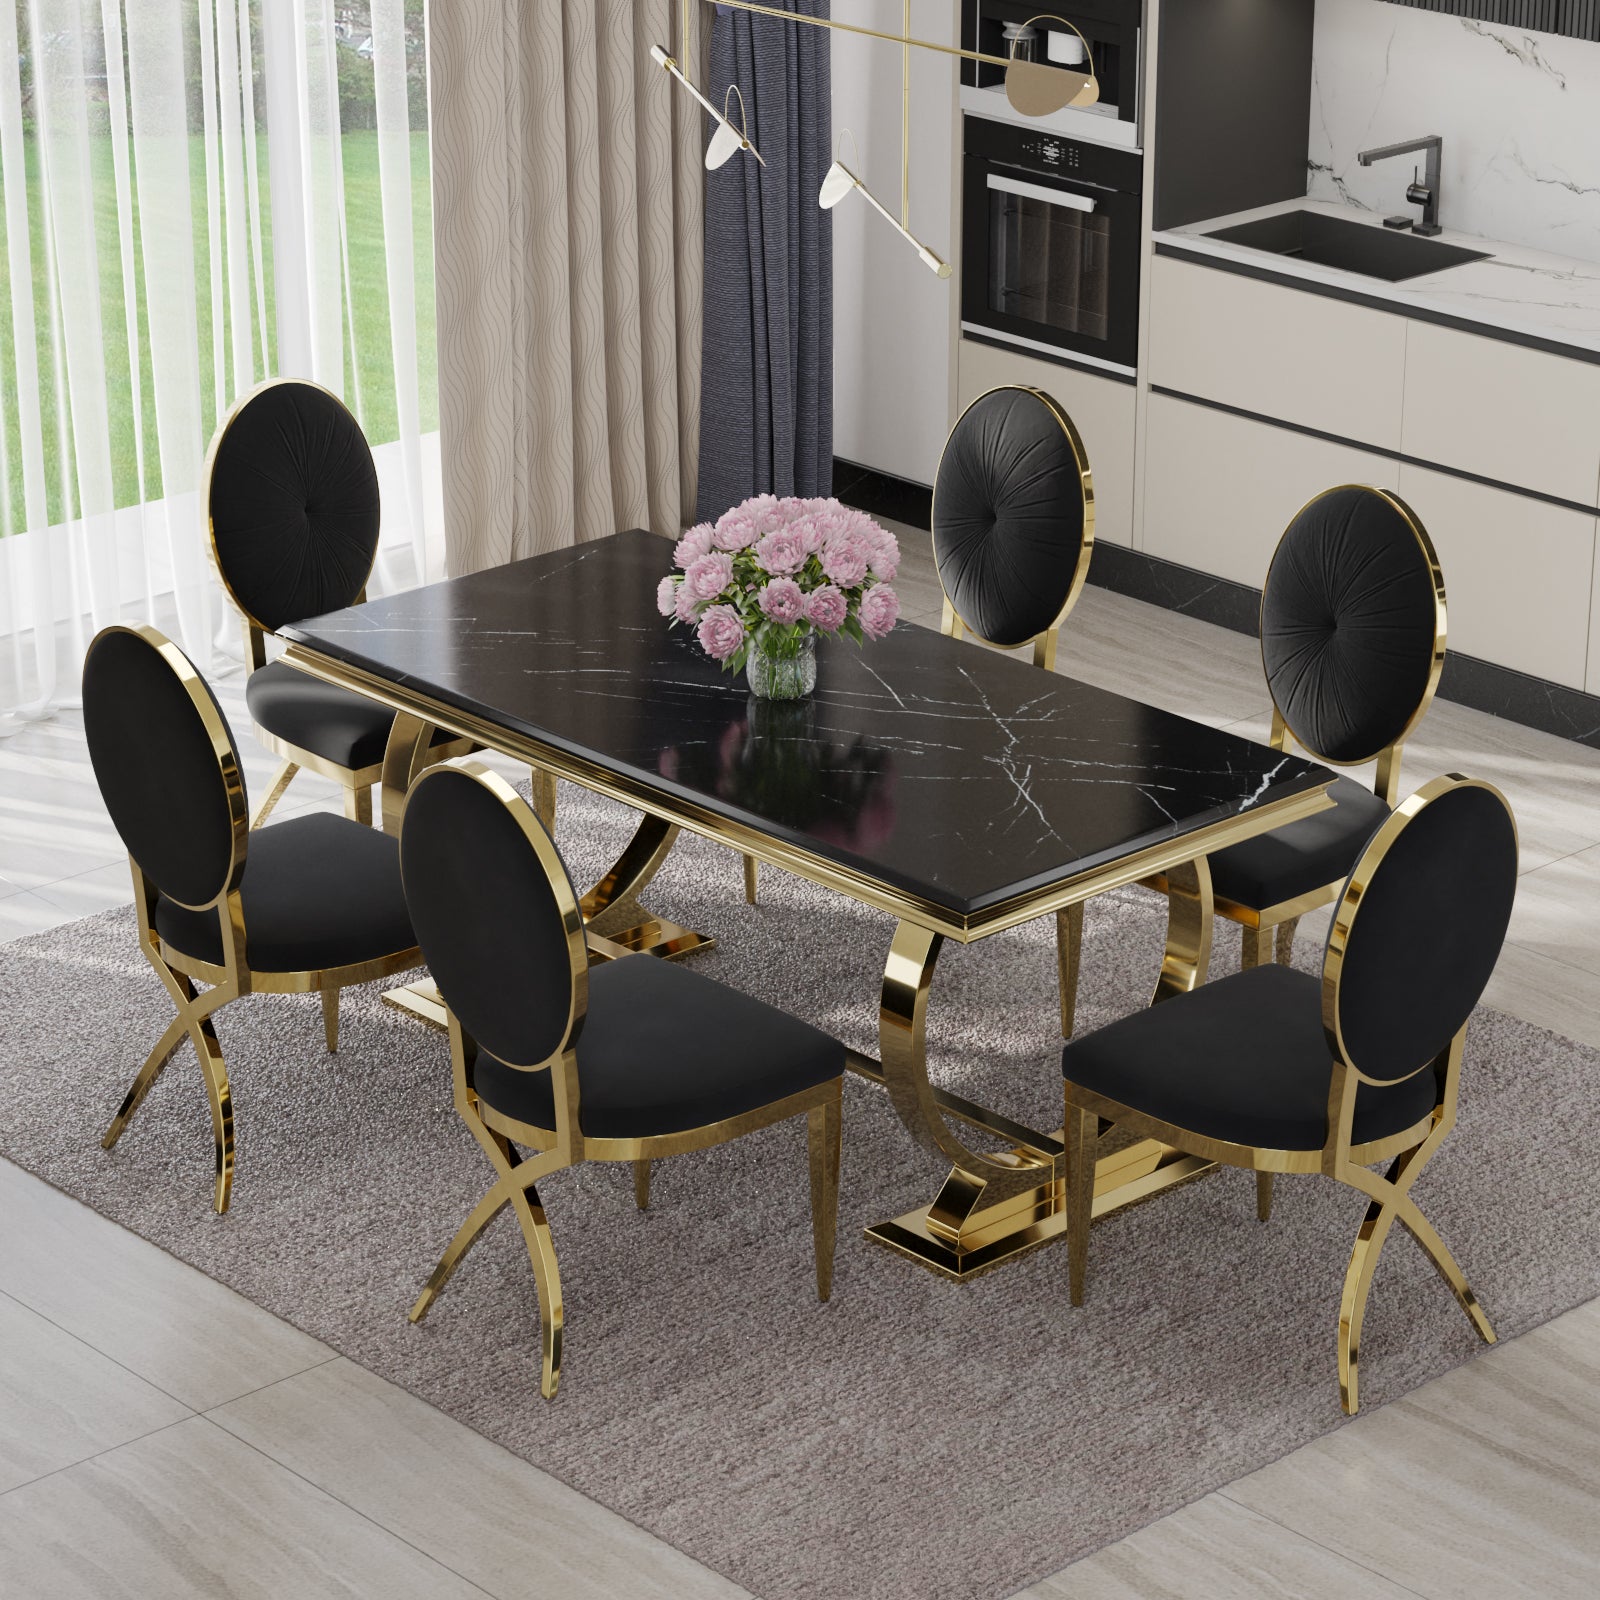 629-Set | AUZ Black and Gold Dining room Sets for 6